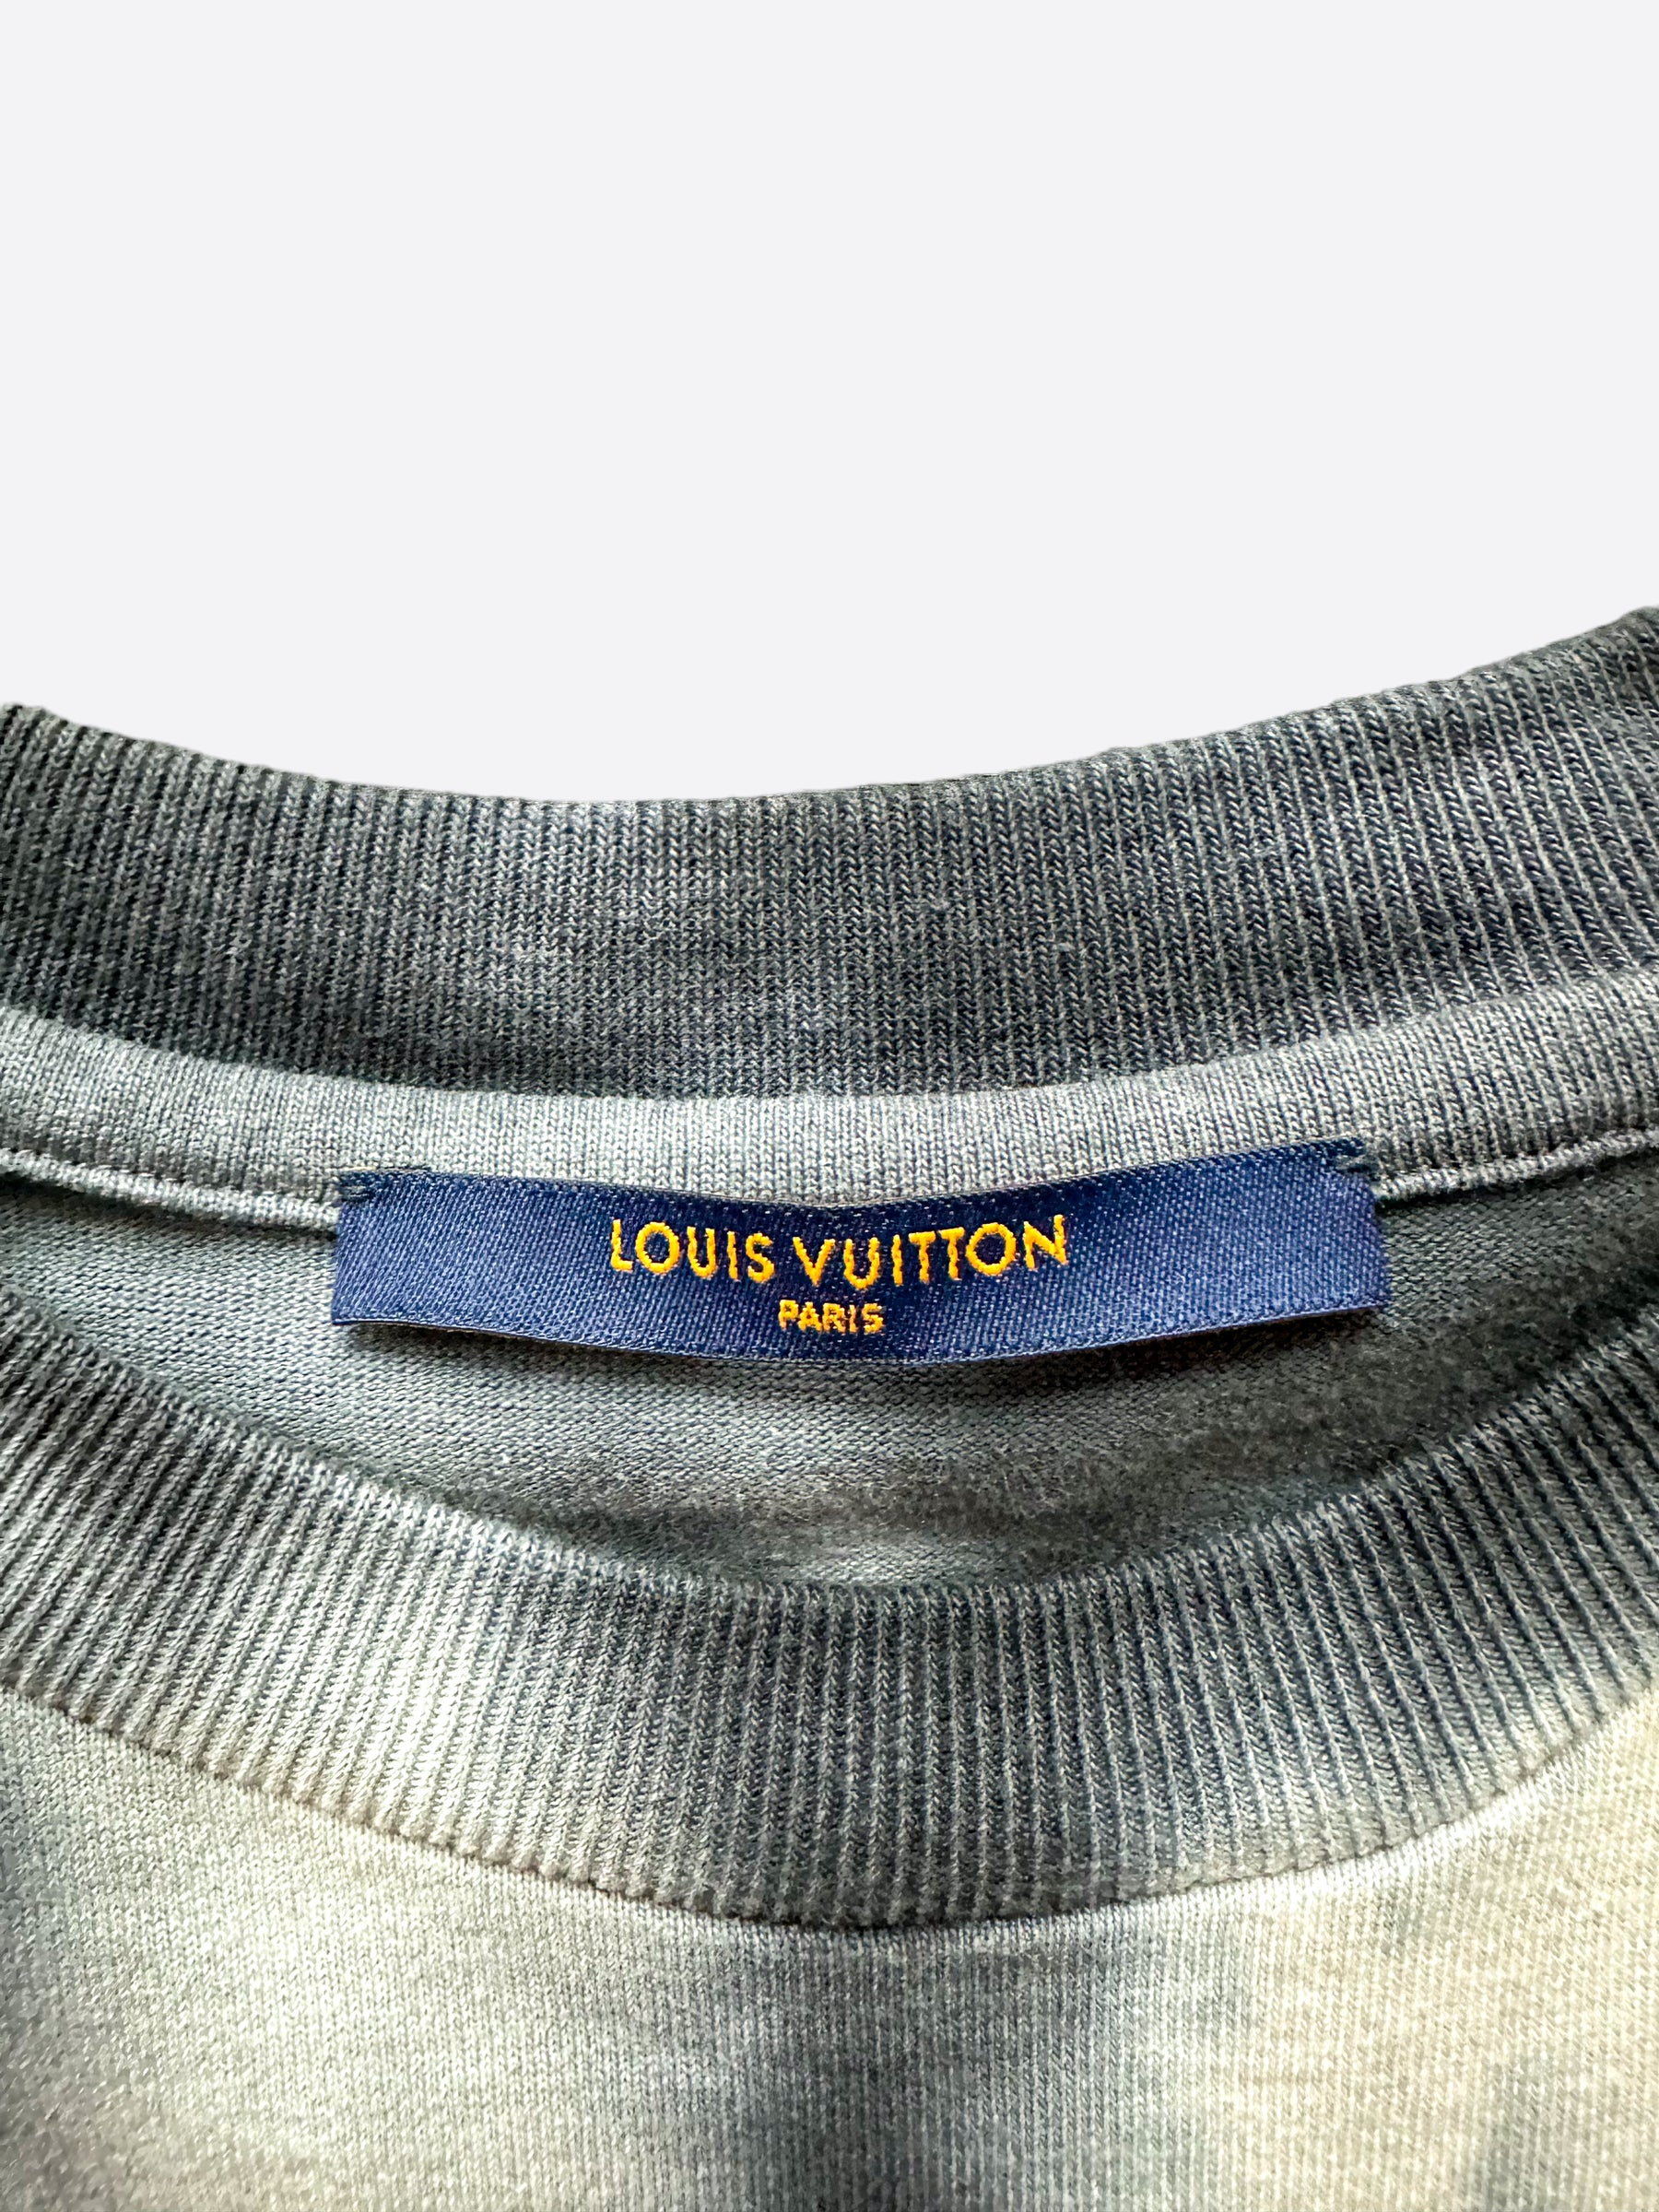 Louis Vuitton Embroidered Signature Short-sleeved Cotton Crewneck 1ABIXR, Blue, M